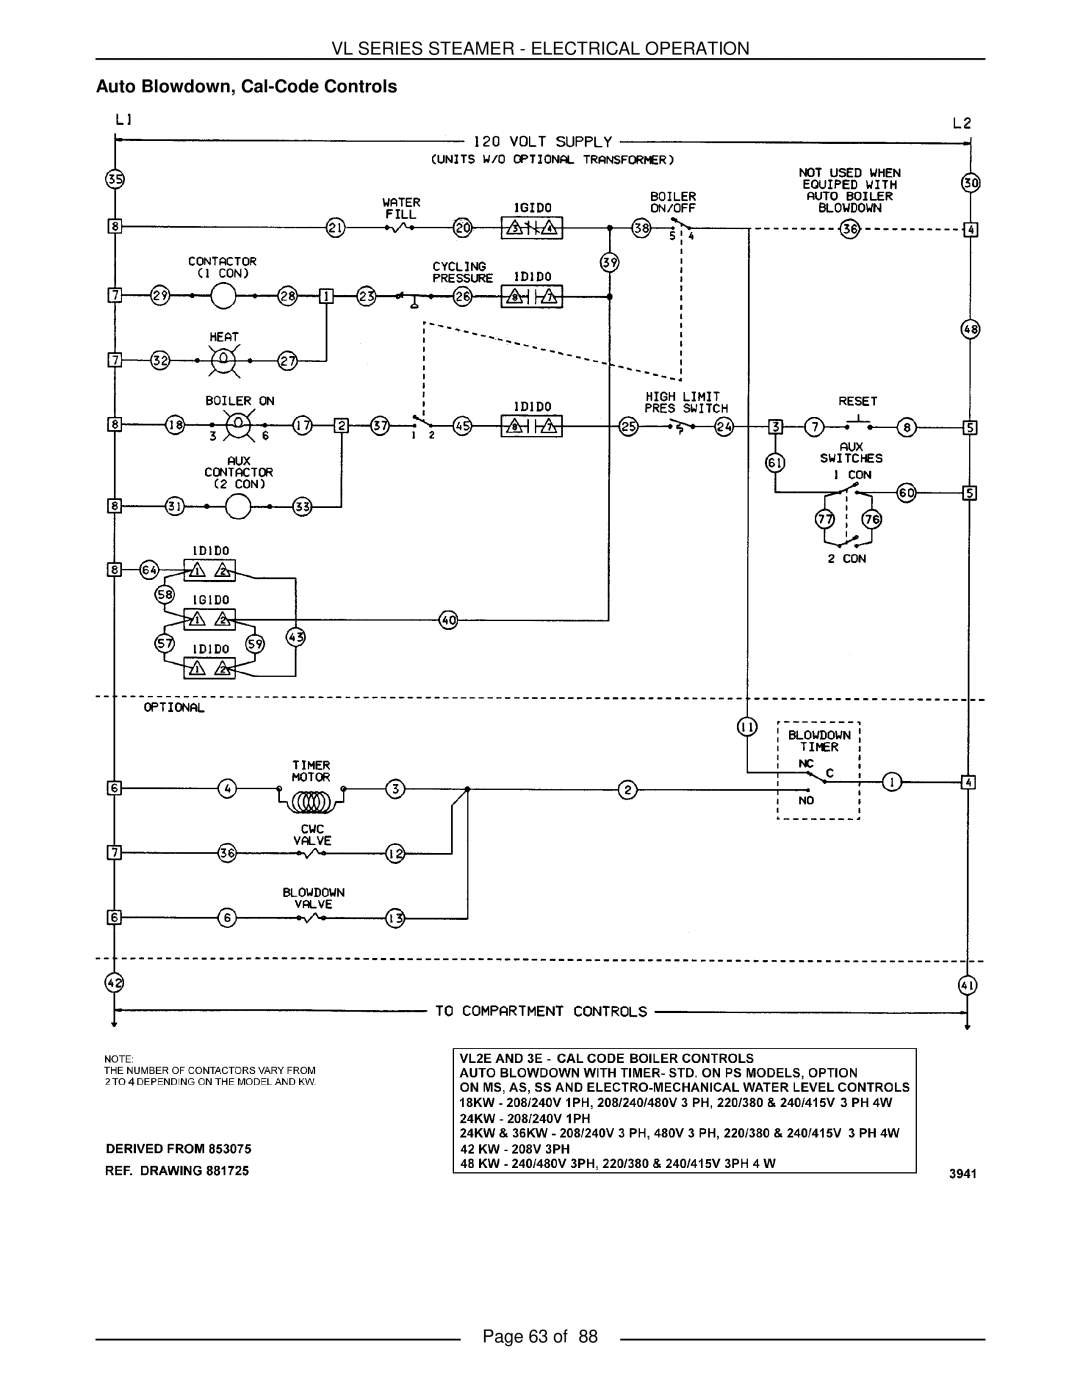 Vulcan-Hart VL2GPS, VL3GMS, VL2GMS Vl Series Steamer - Electrical Operation, Auto Blowdown, Cal-CodeControls, Page 63 of 